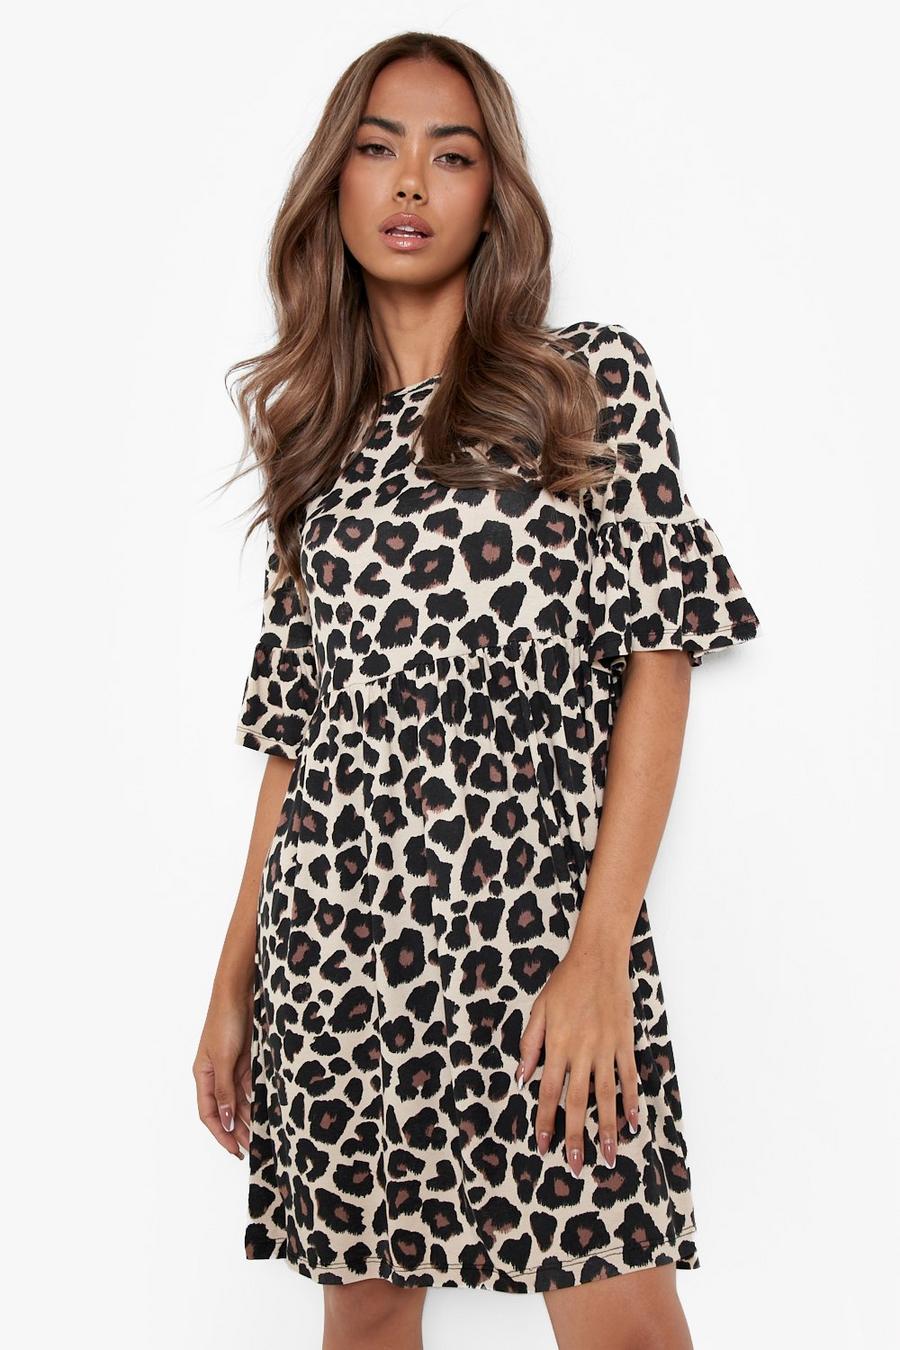 Tan brown Leopard Print Smock Dress